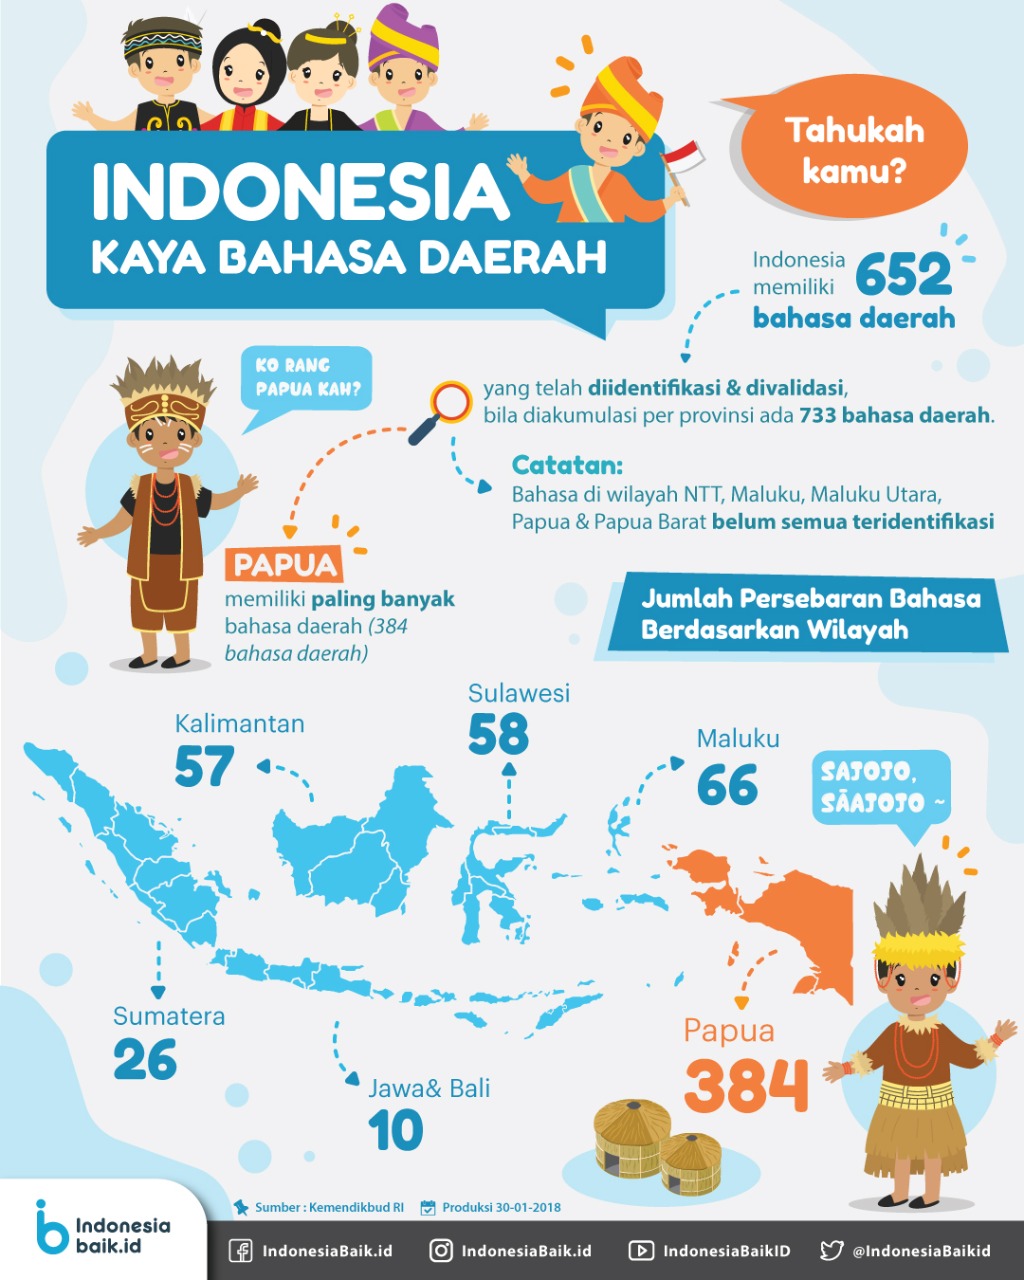 Indonesia Kaya Bahasa Daerah | Indonesia Baik